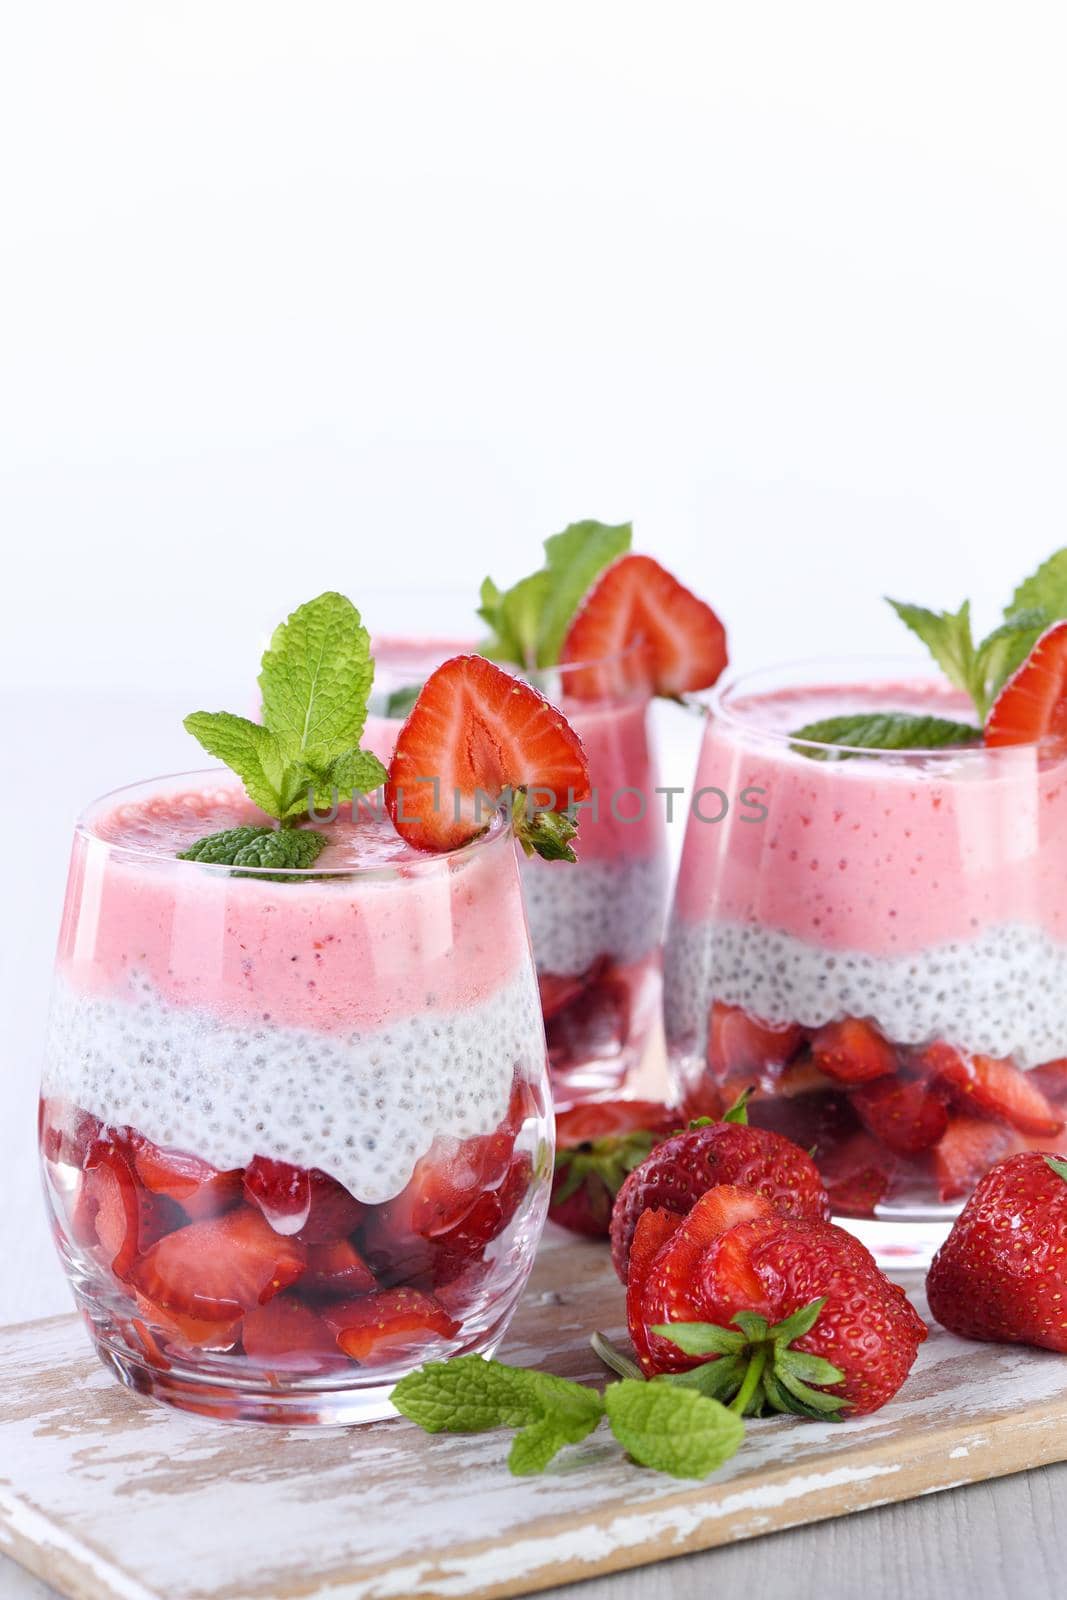 Strawberry dessert with milk vanilla chia and fresh strawberry pieces